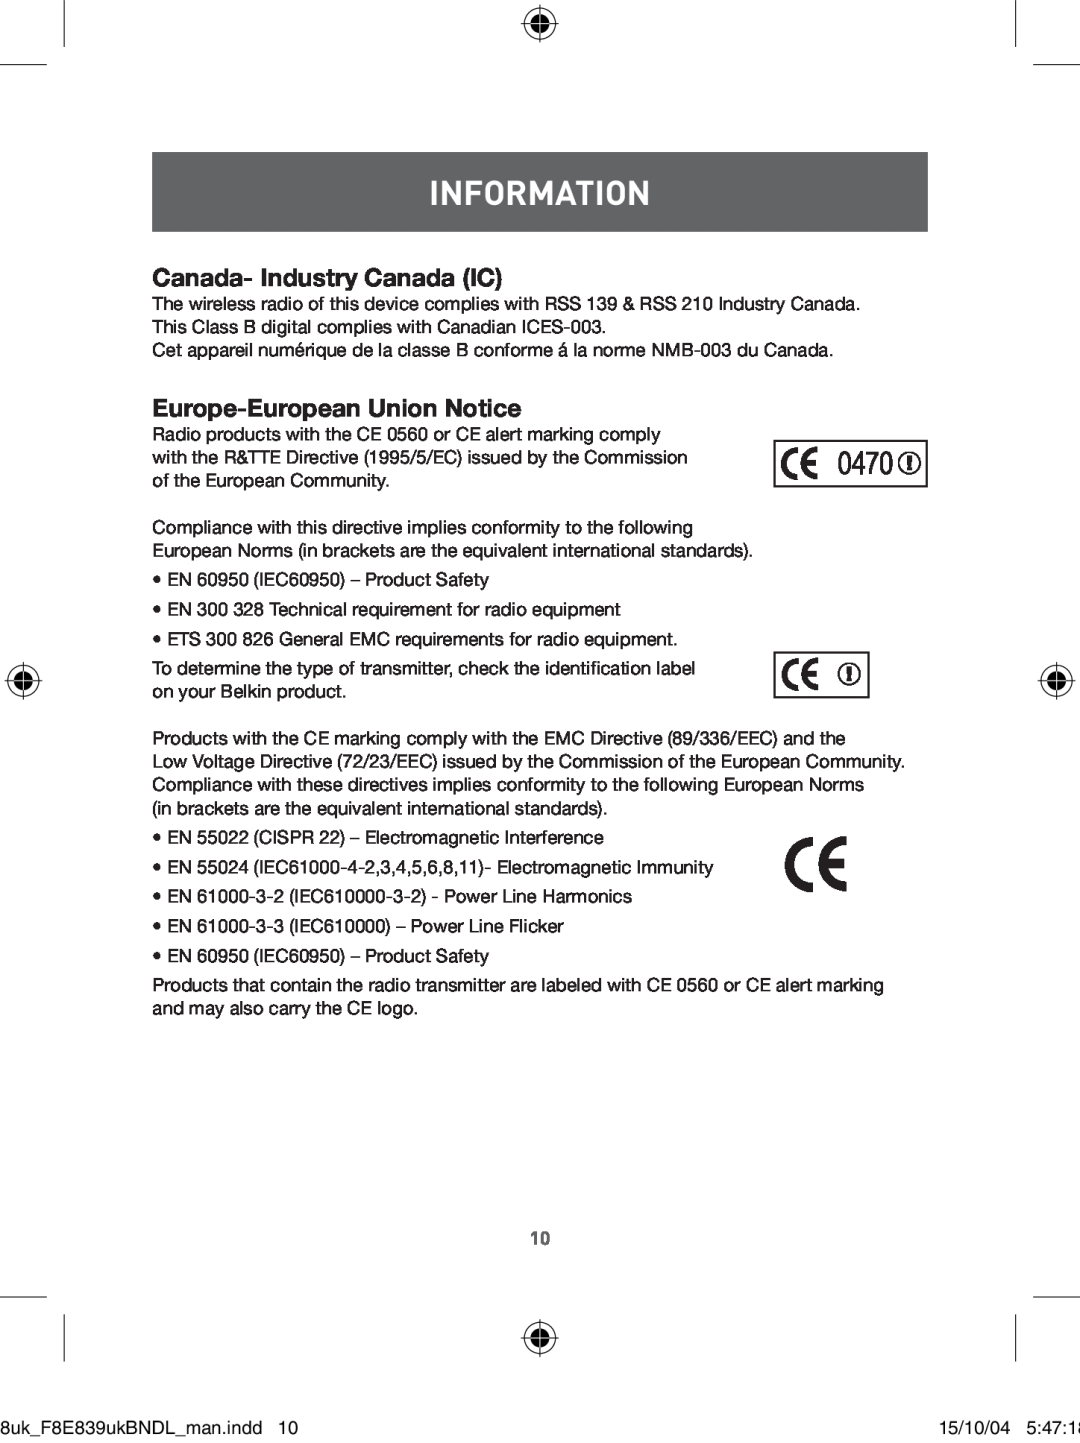 Belkin F8E839UKBNDL user manual Canada- Industry Canada IC, Europe-European Union Notice, Information 